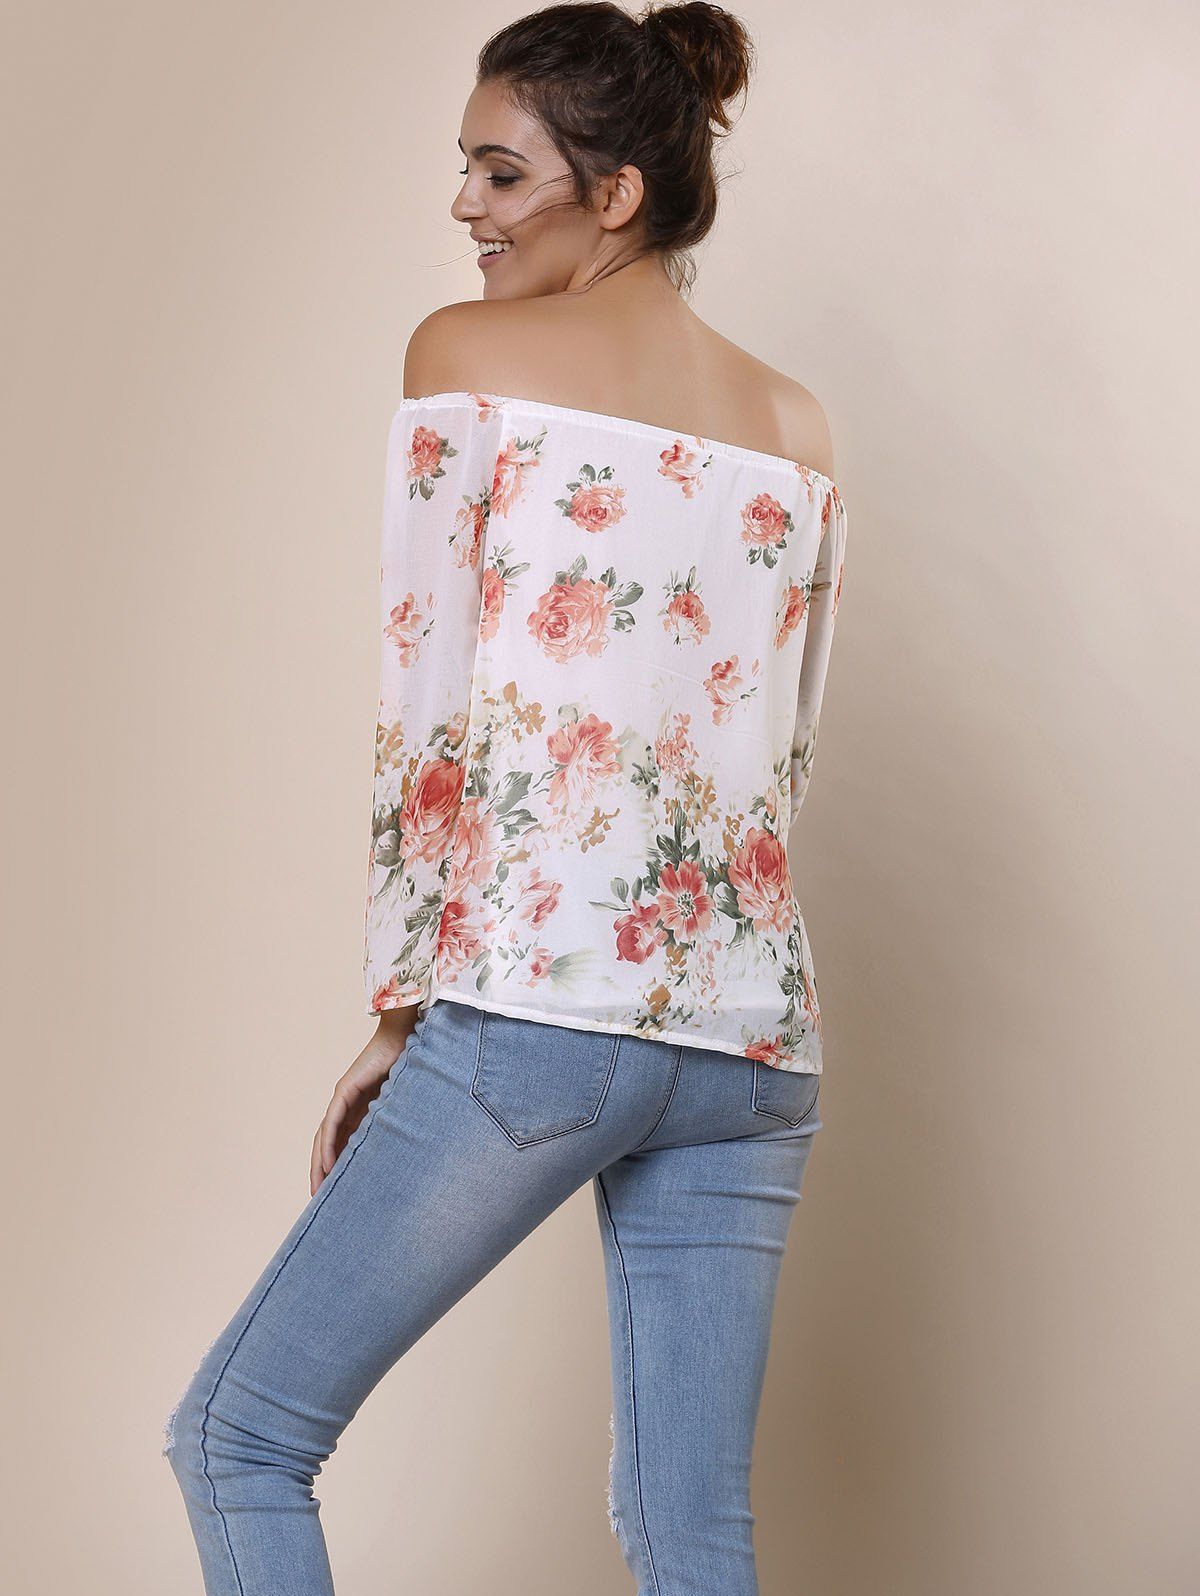 Denim latest stylish chiffon blouses for sale hangers 92501 used